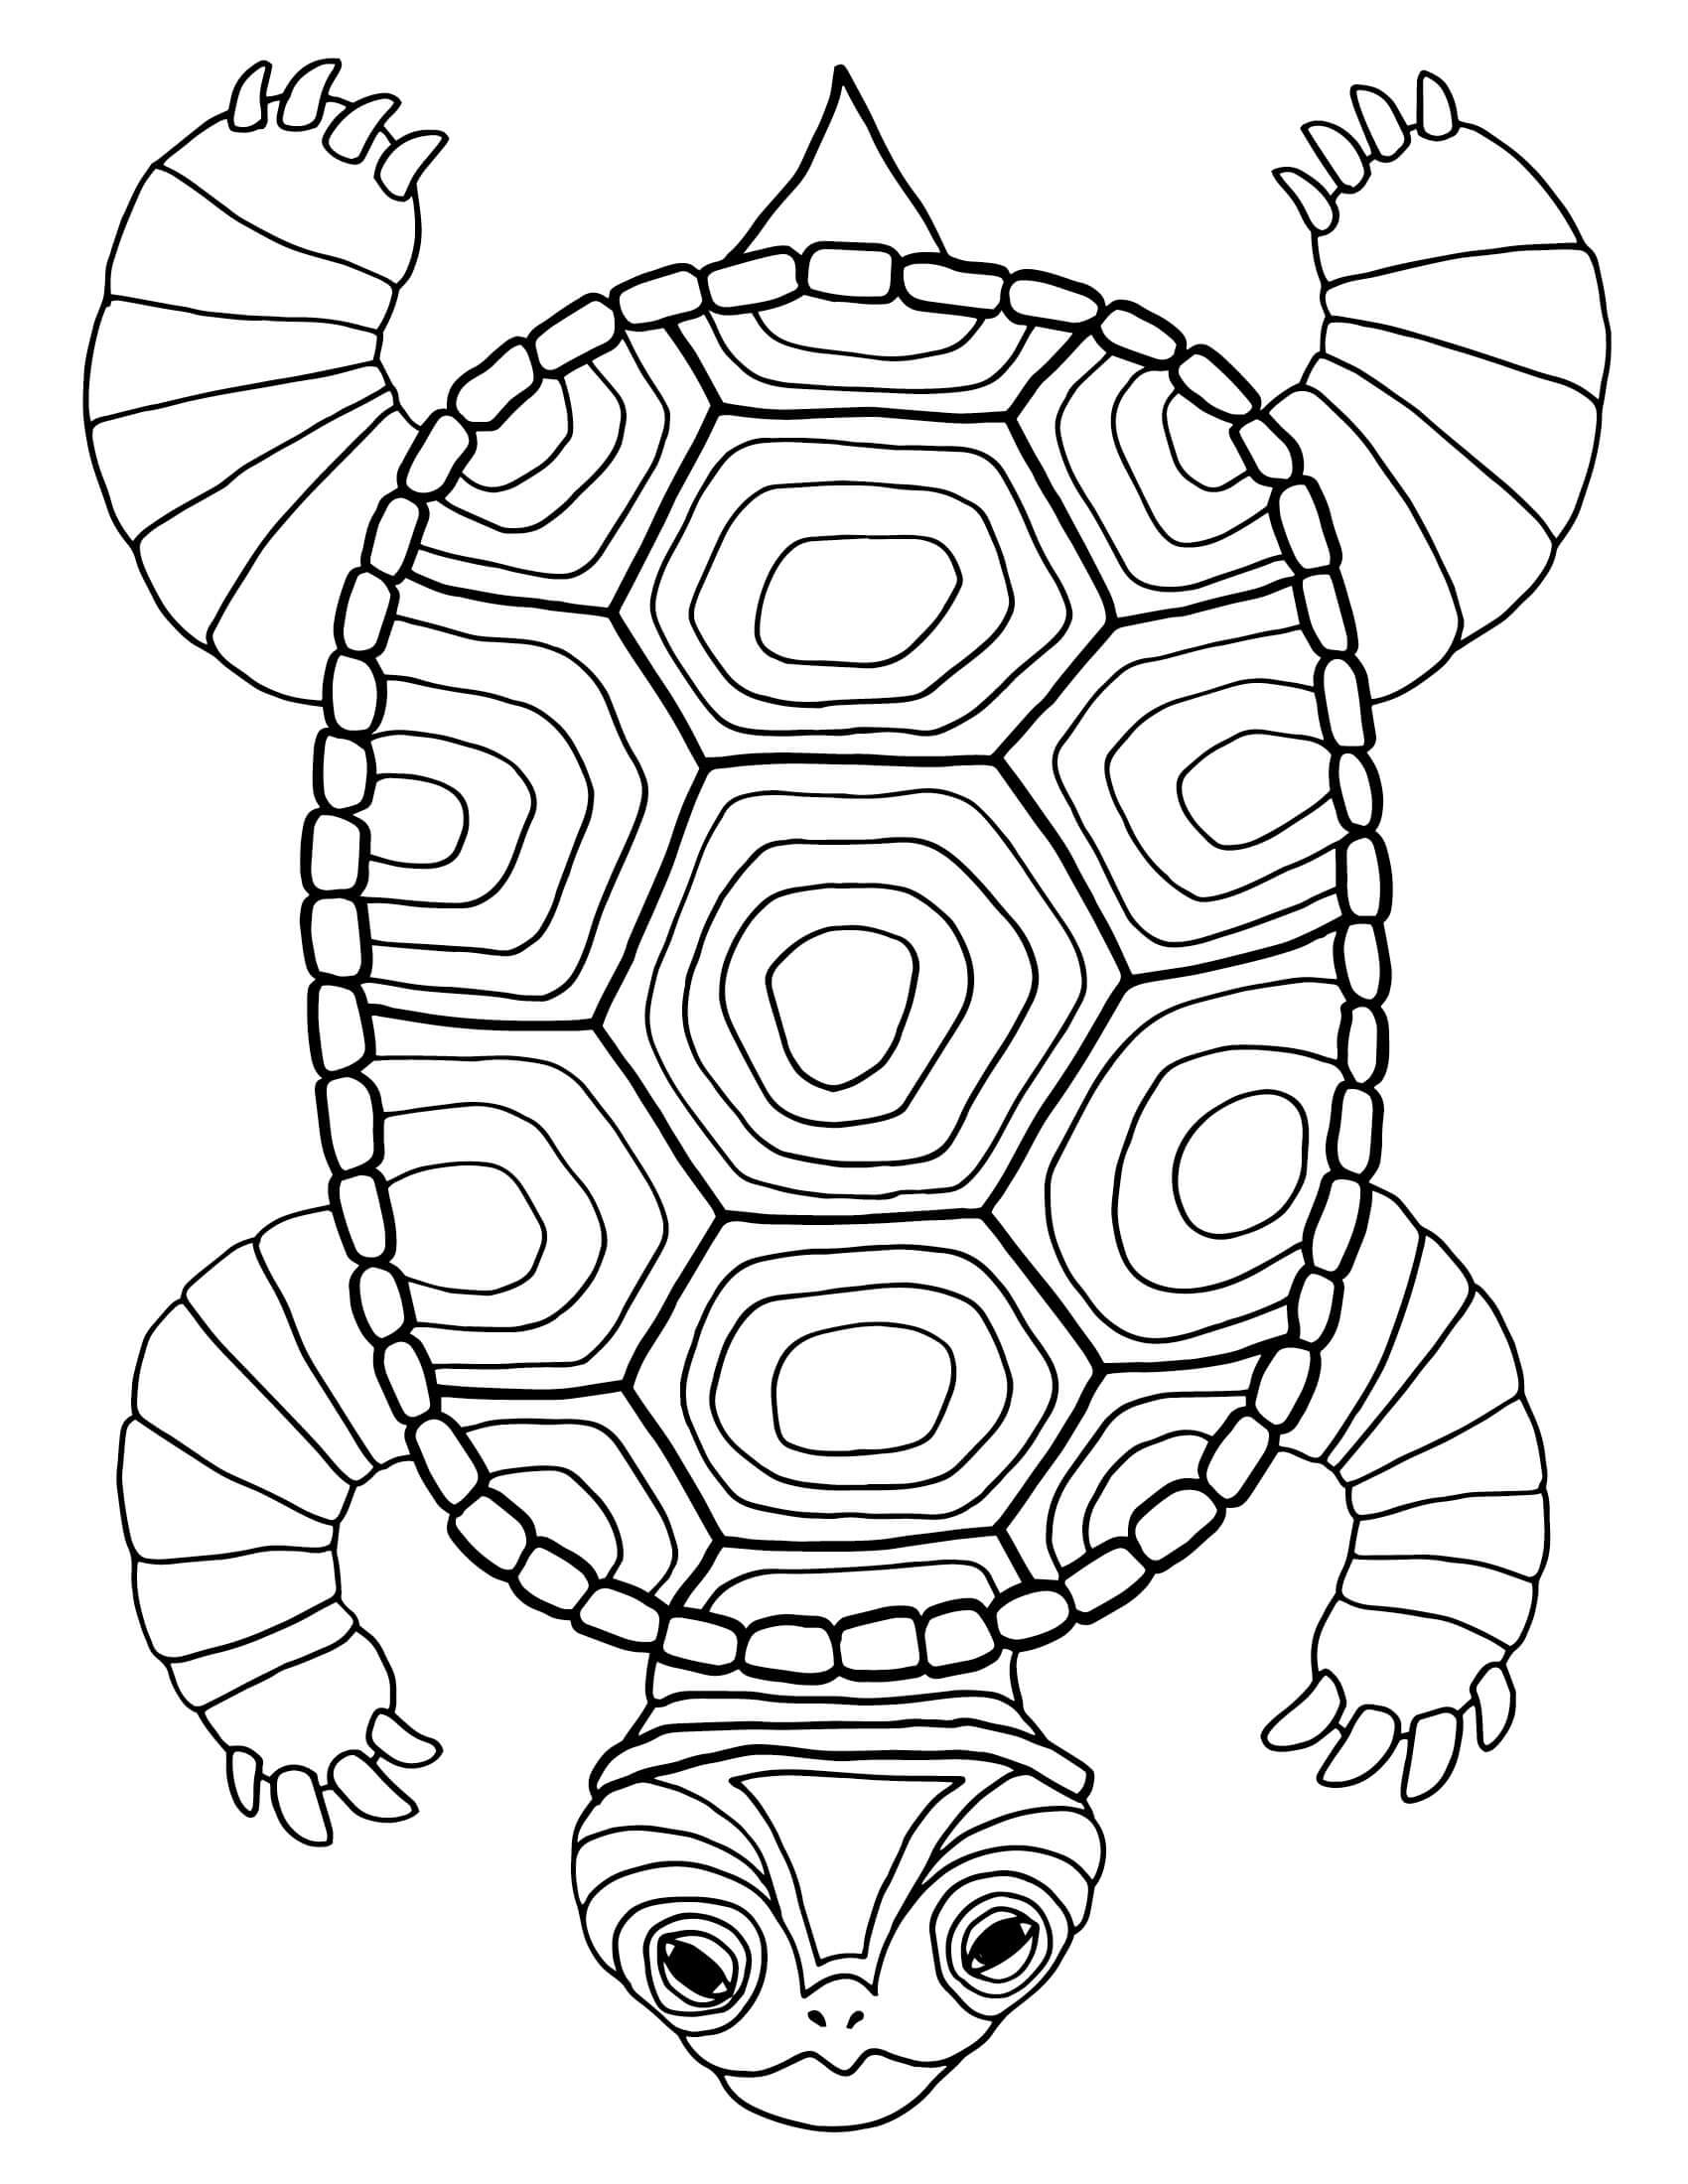 Mandala Turtle Coloring Page - Sheet 7 Mandalas